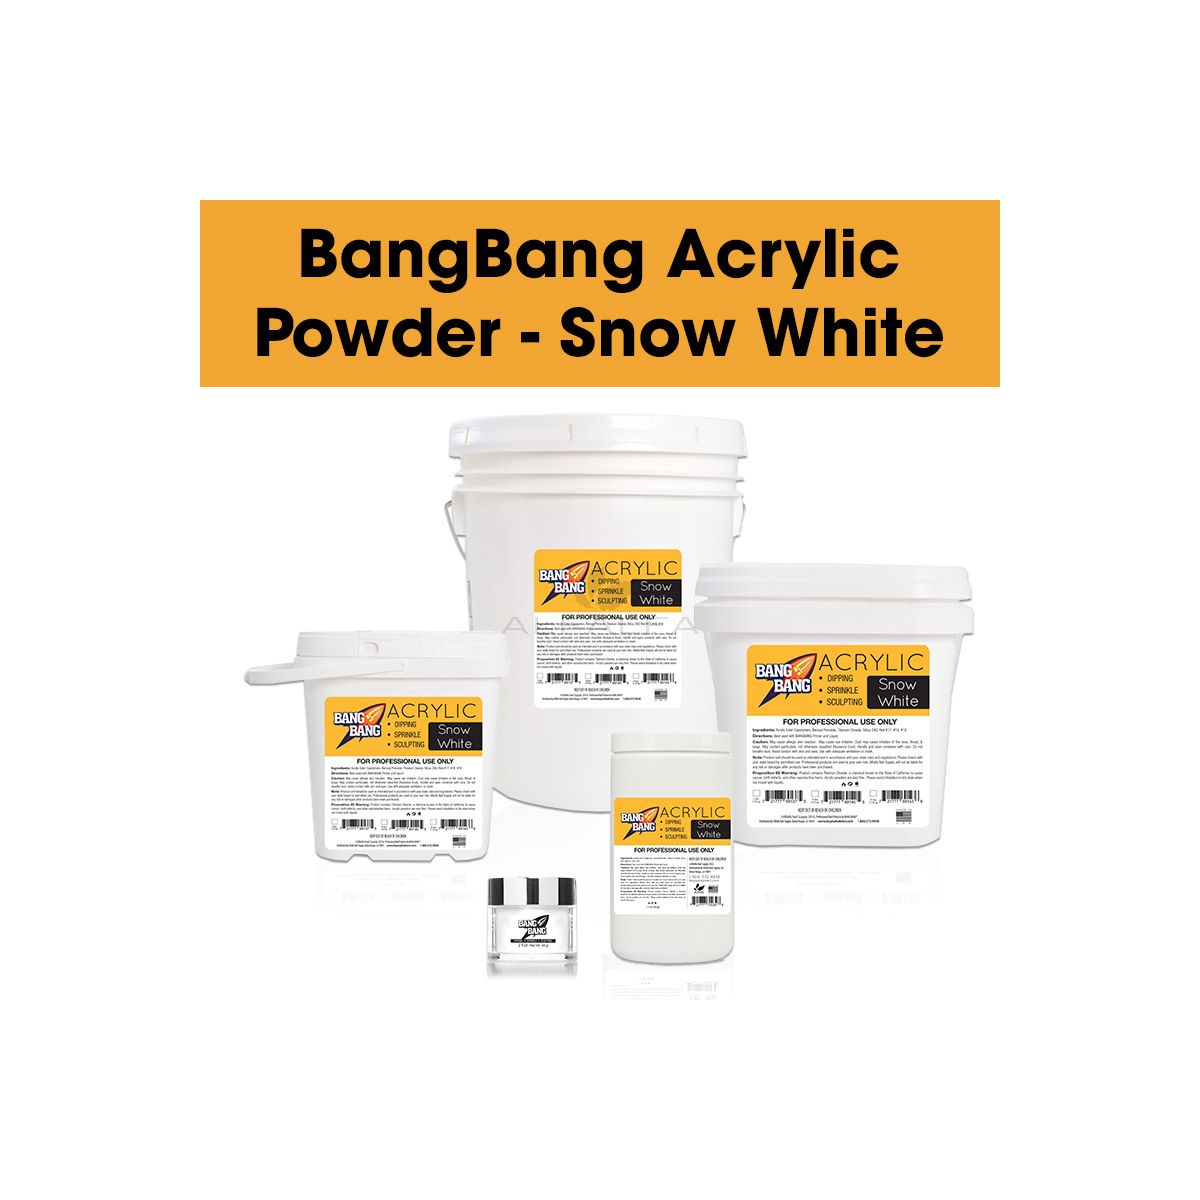 BangBang Acrylic Powder - Snow White 